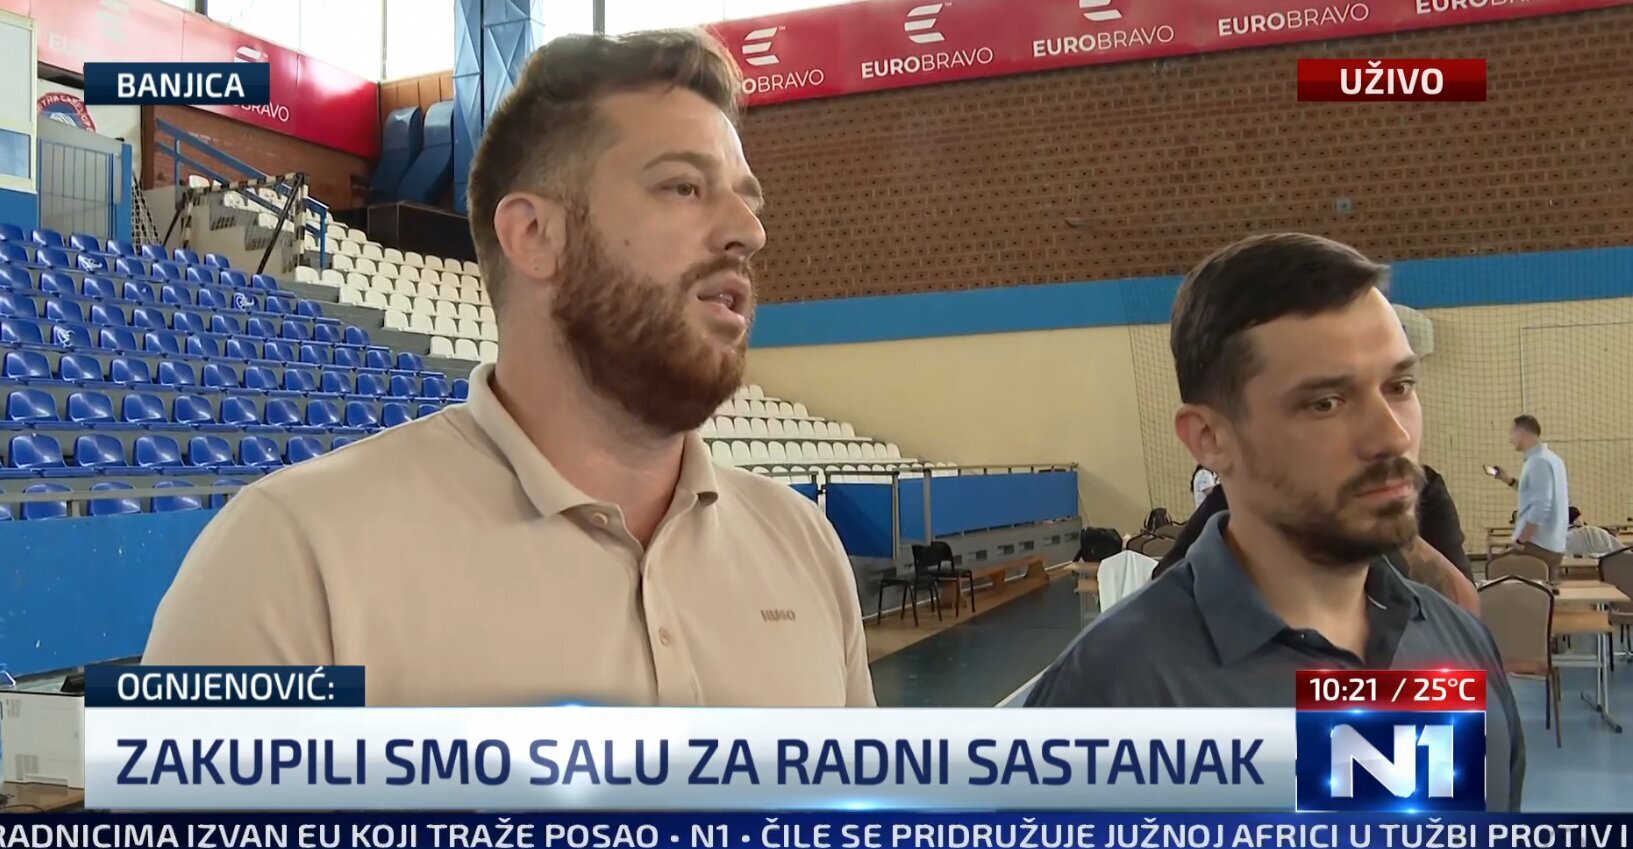 SNS u sportskom centru Banjica organizovao kol centar: Sumnja se u zloupotrebu izbornog procesa (VIDEO) 2